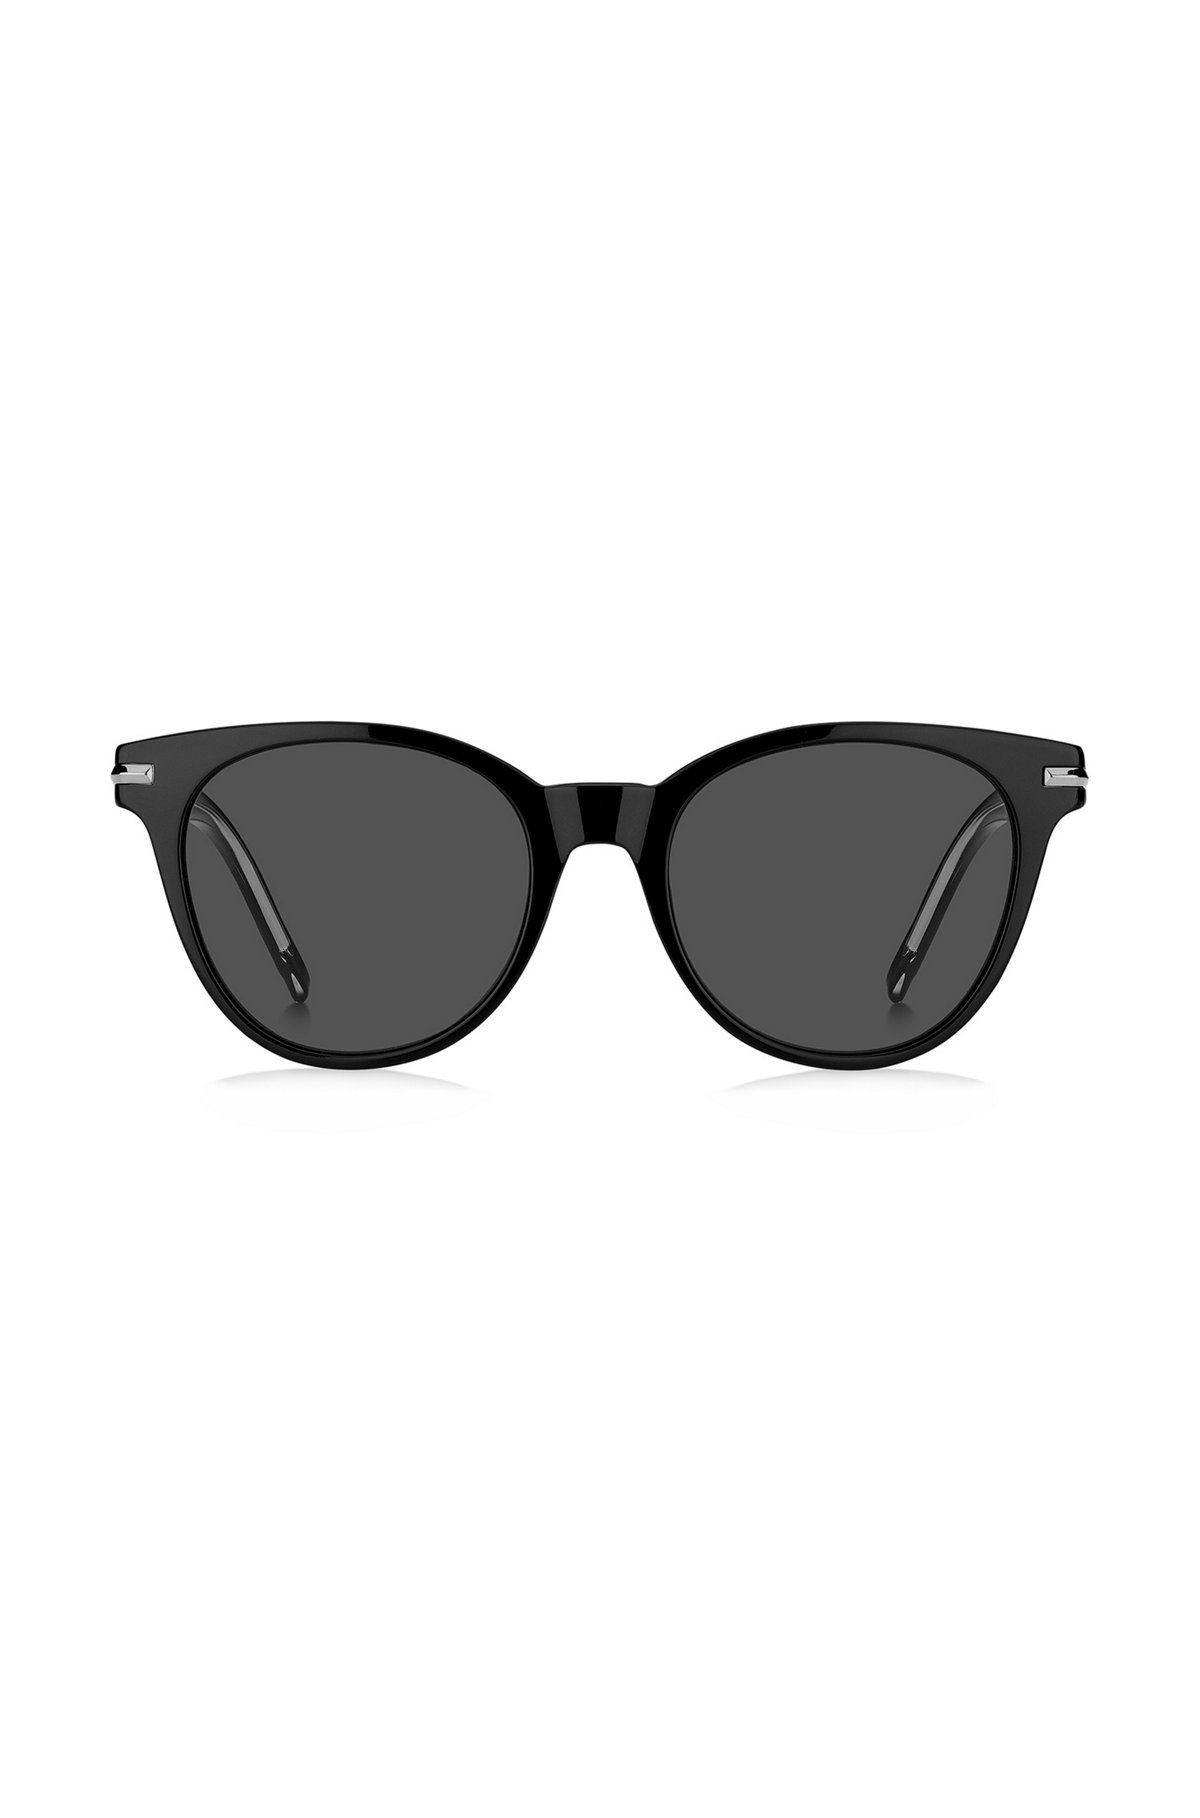 Black-acetate sunglasses with lasered logos, Black